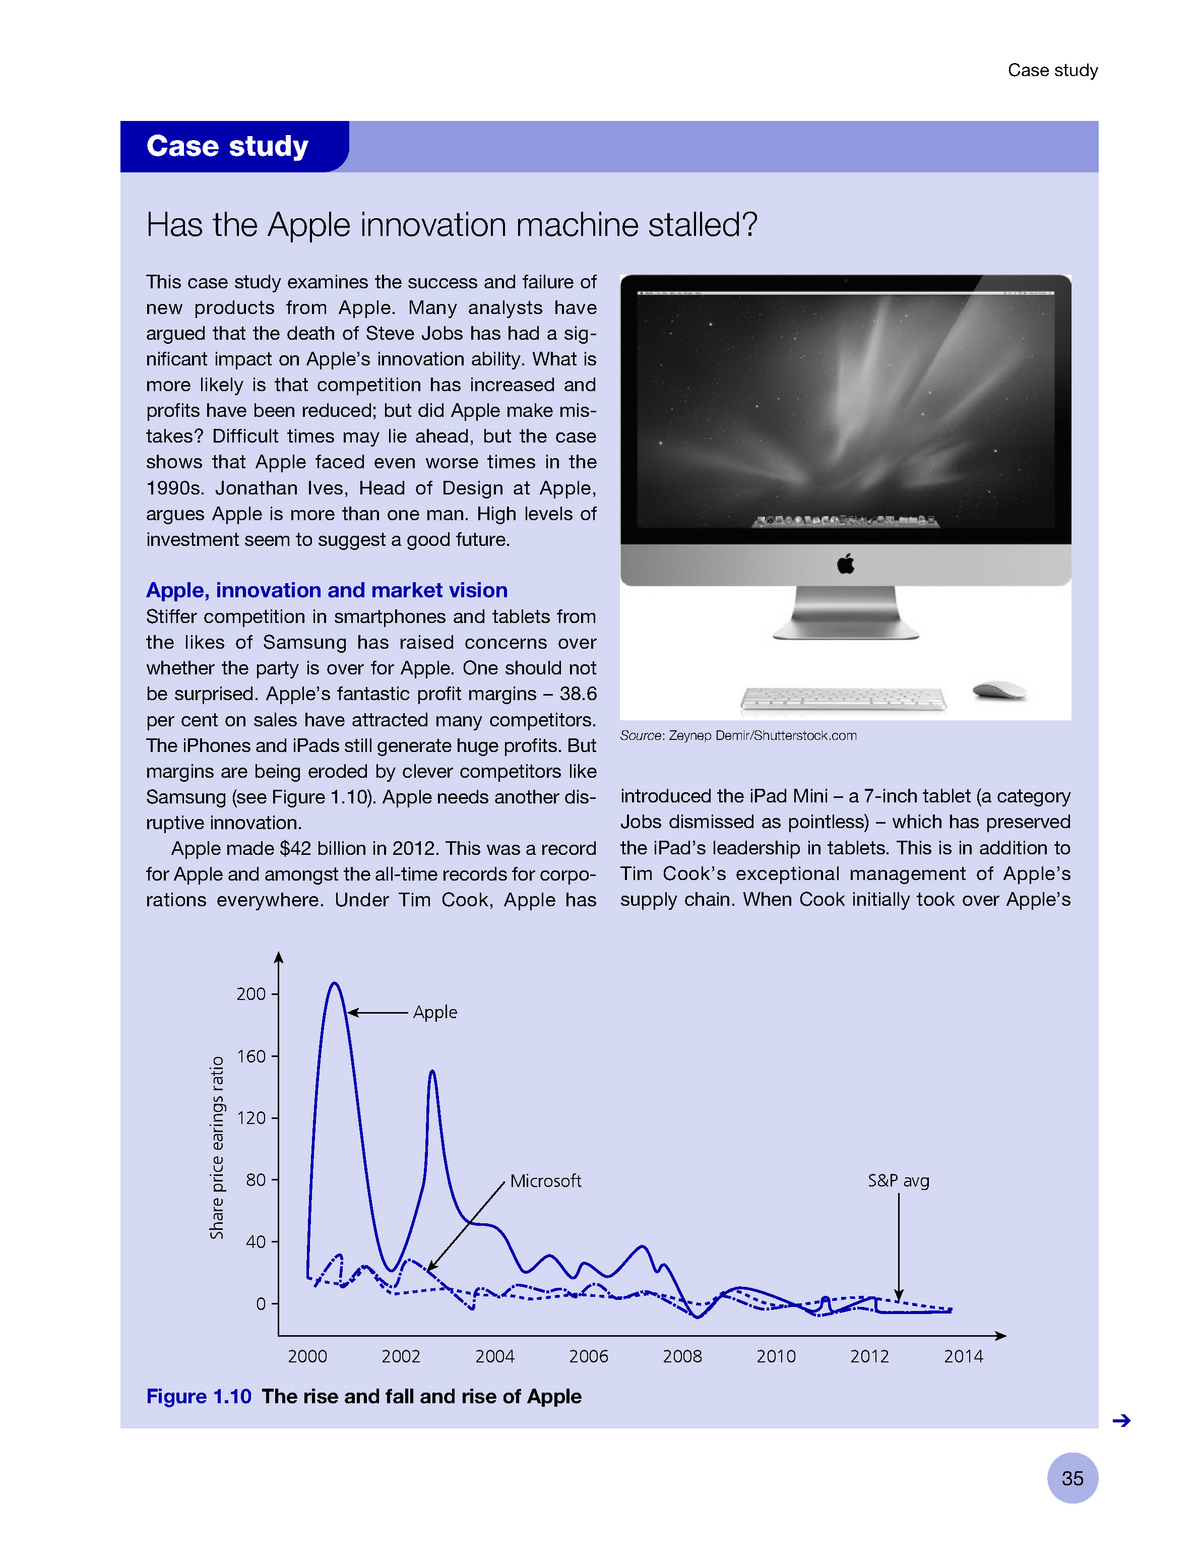 this case study exhibits apples